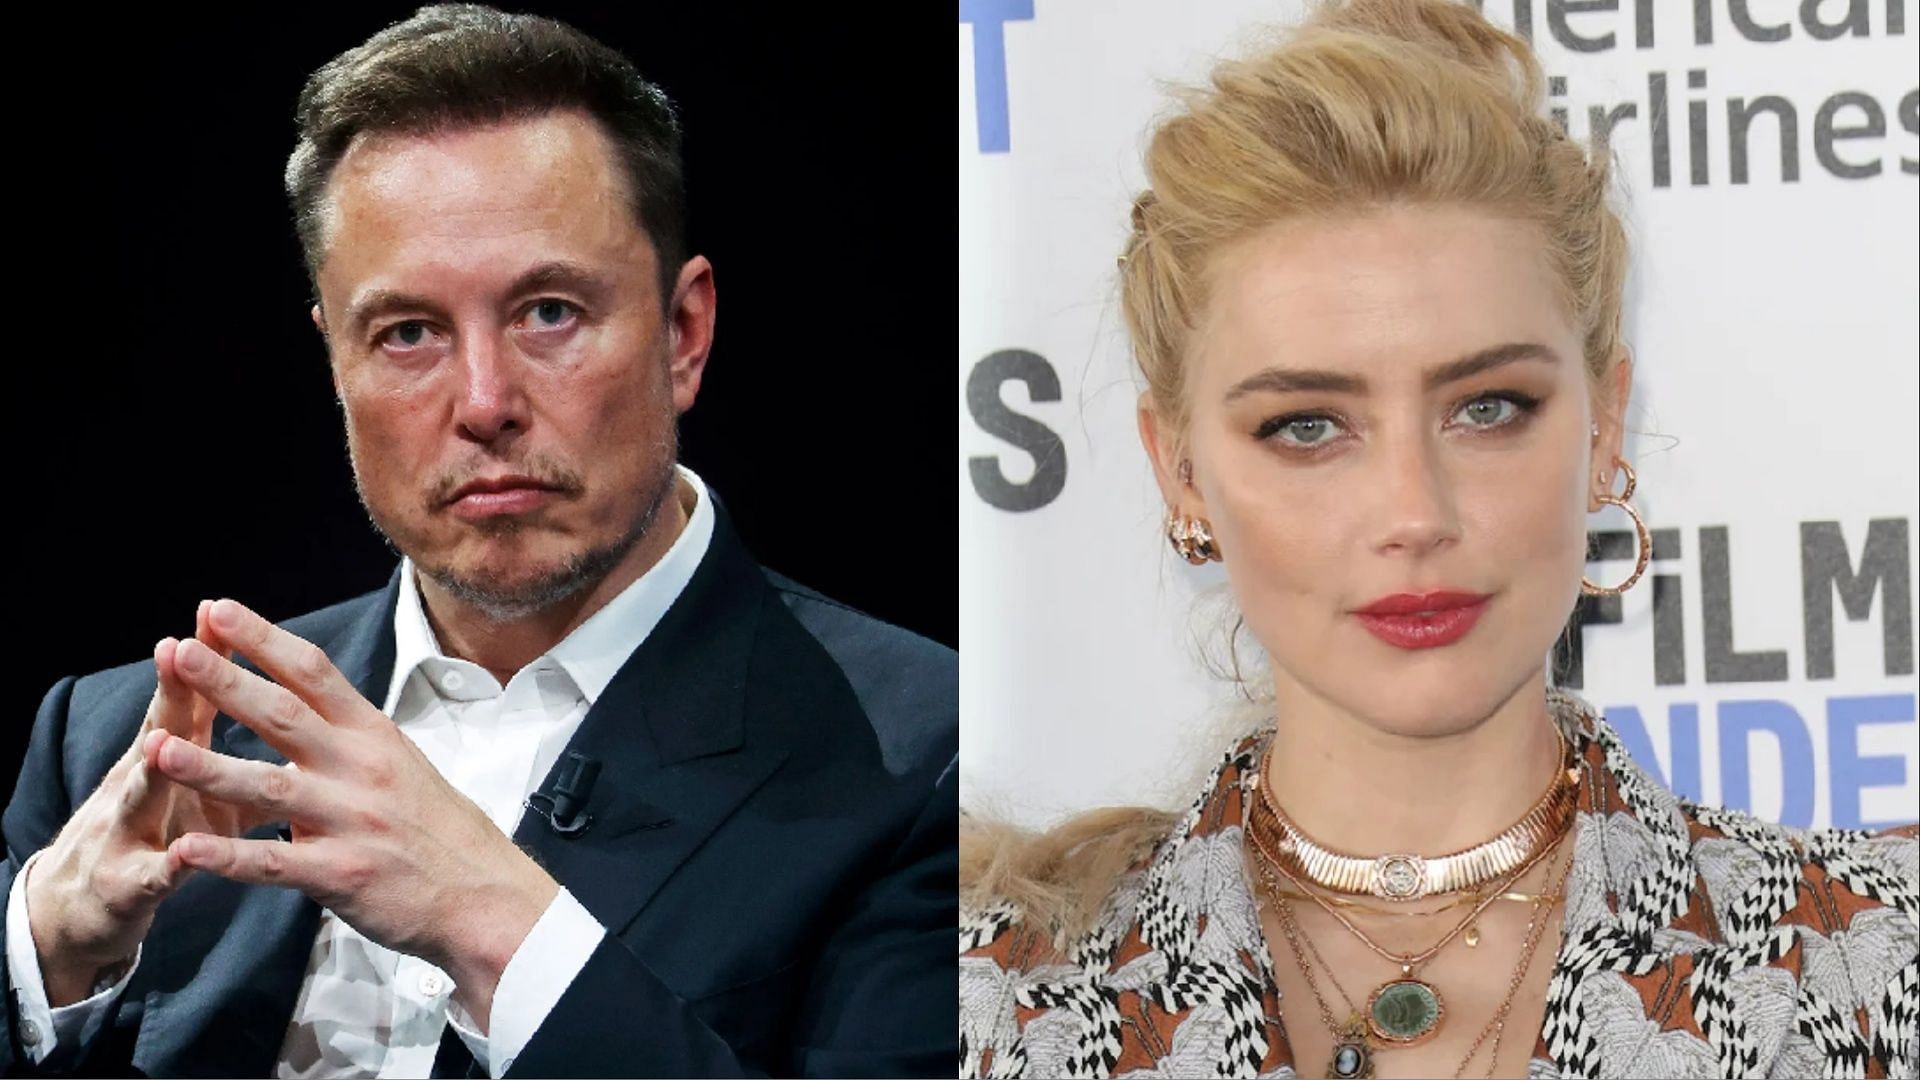 Elon Musk and Amber Heard. (Photos via Getty Images)